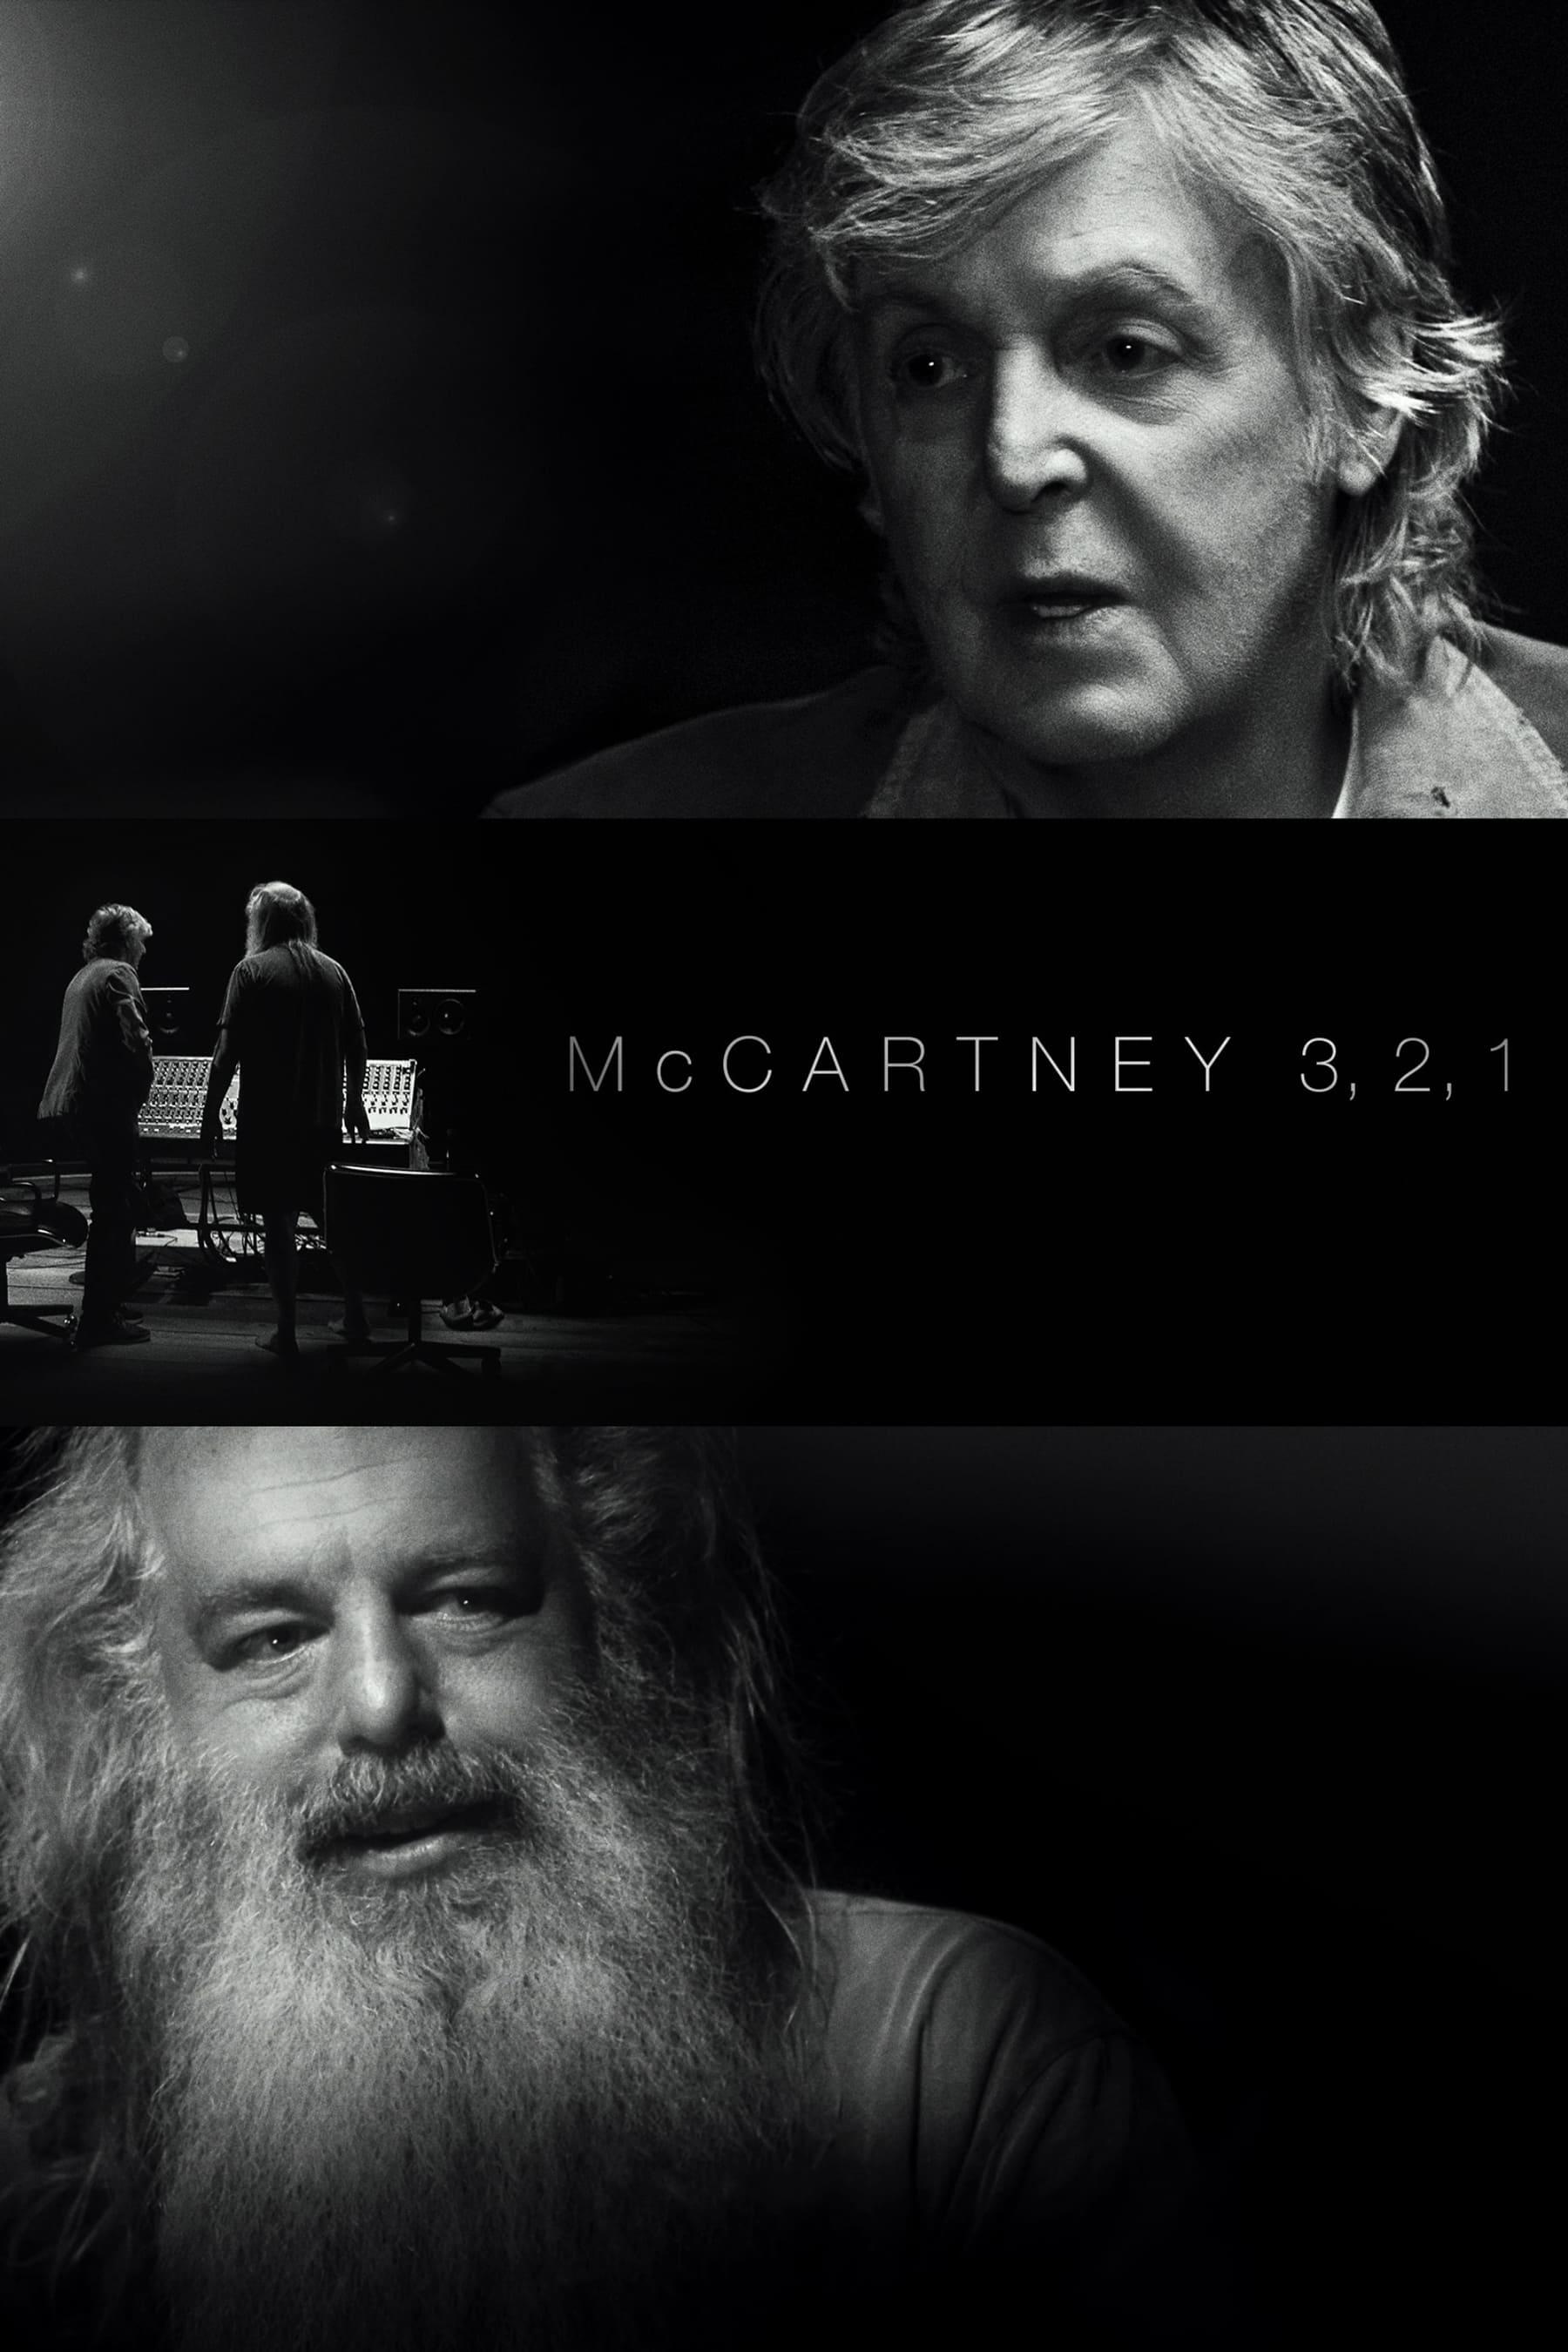 McCartney 3, 2, 1 poster